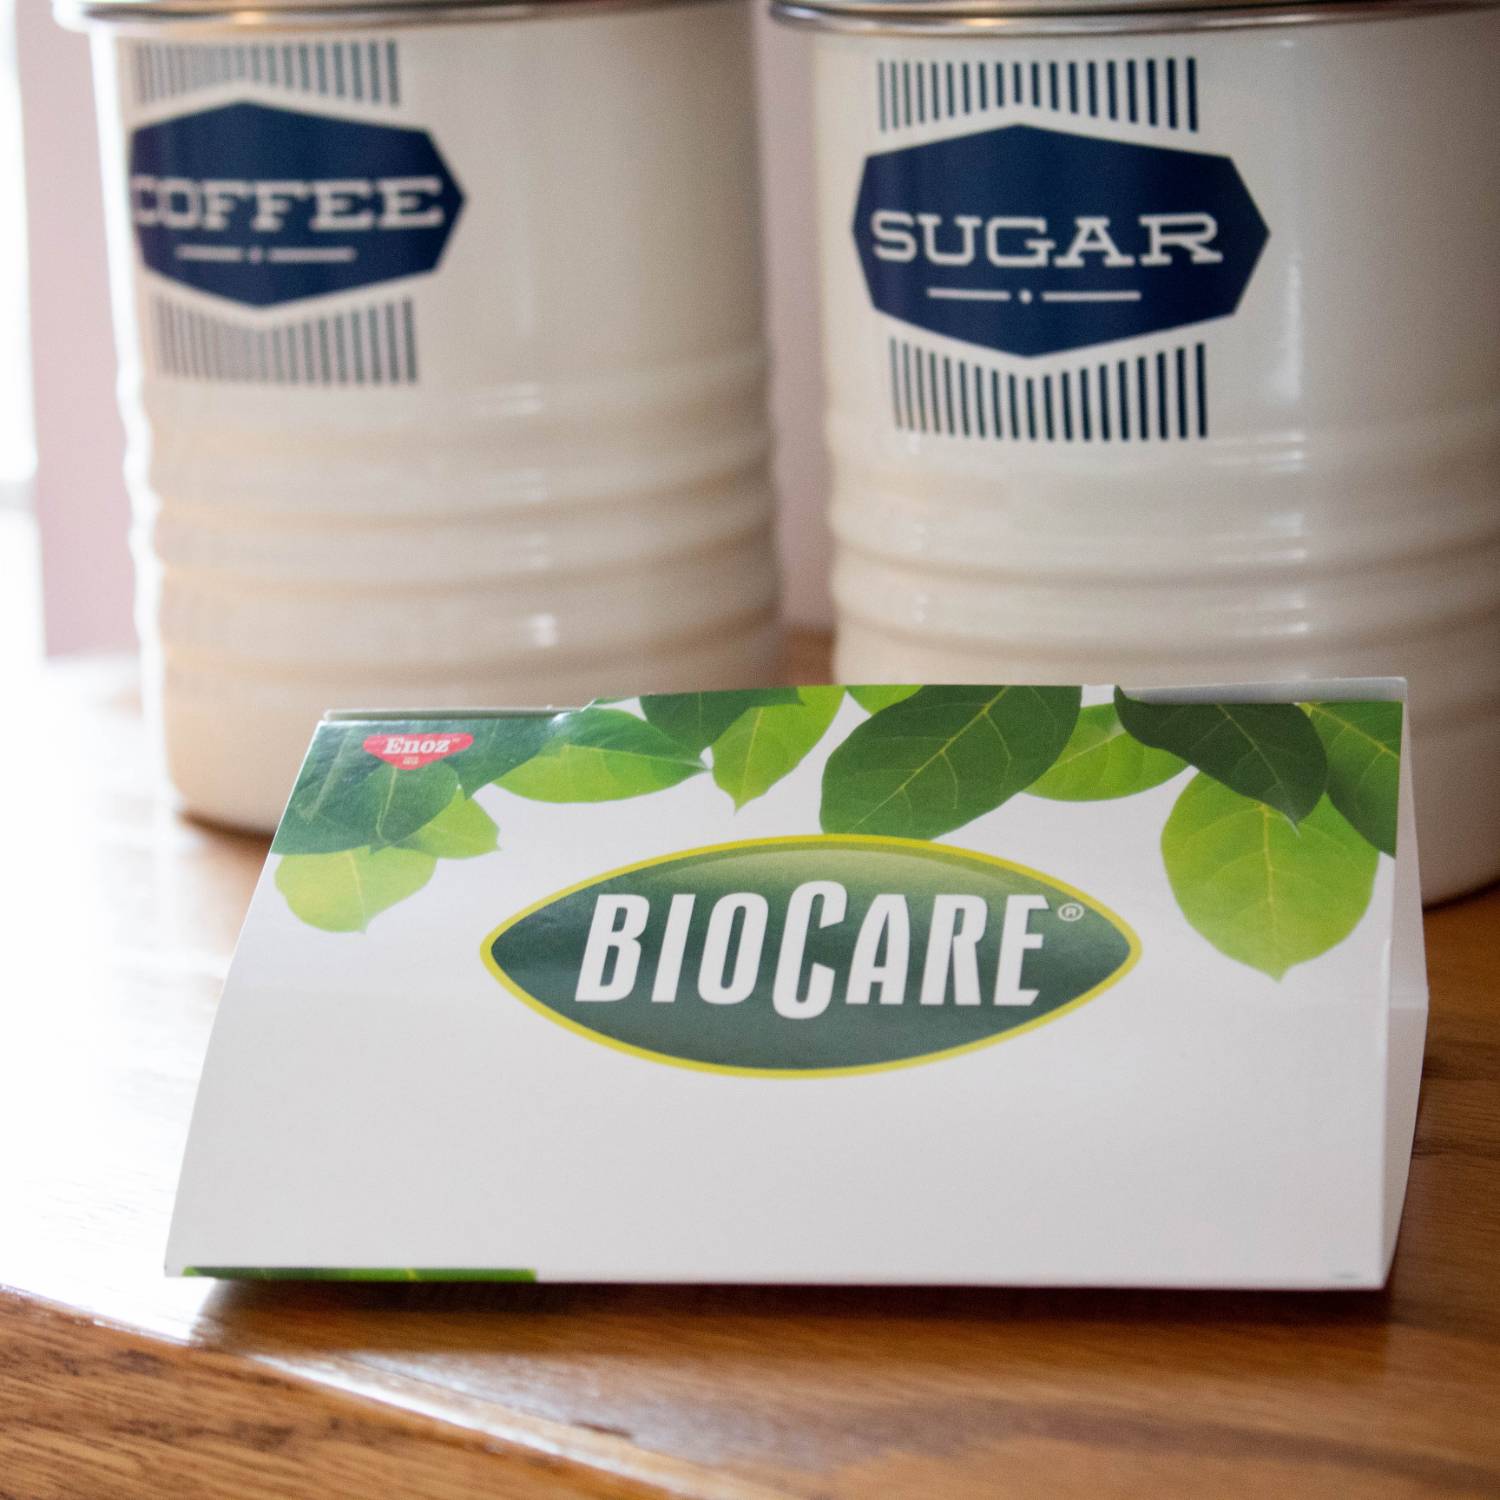 Biocare Flour & Pantry Moth Traps